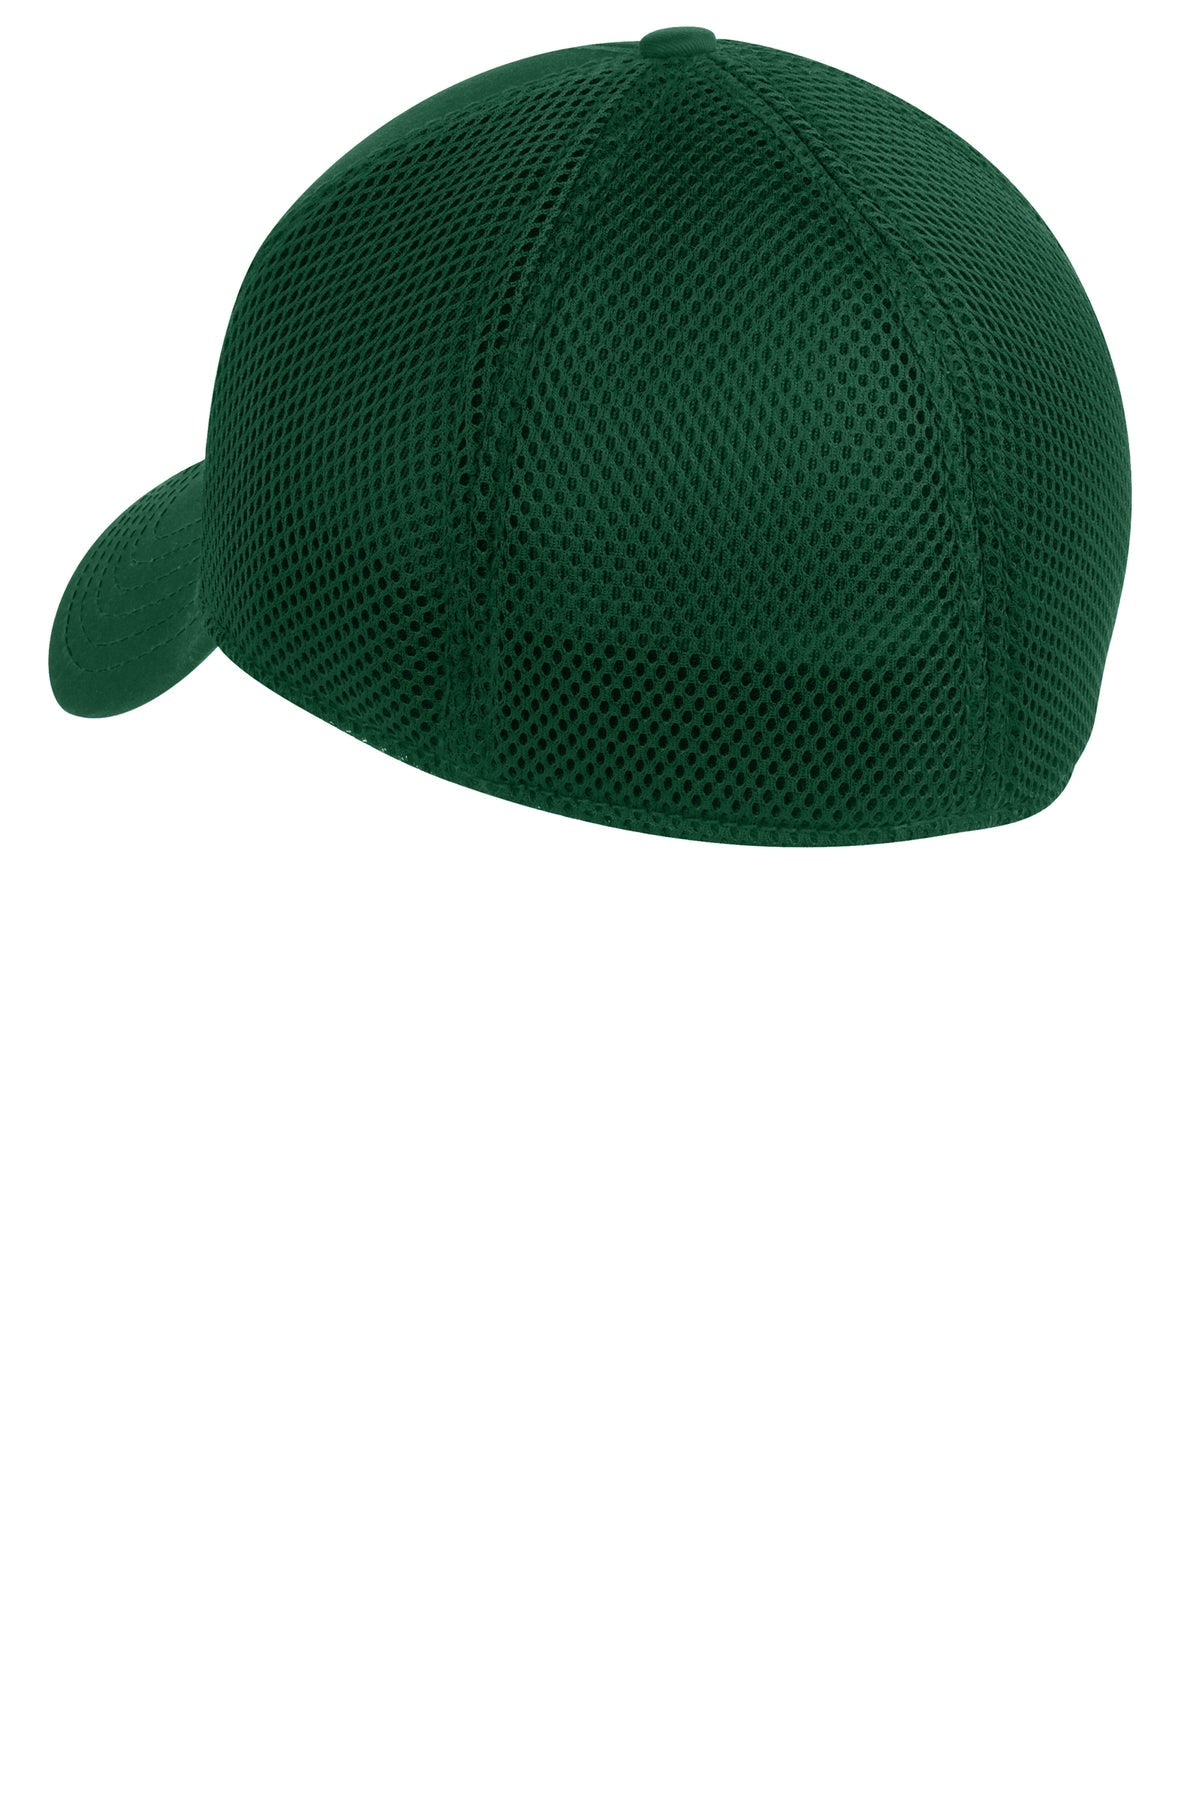 New Era Stretch Mesh Customized Caps, Dark Green